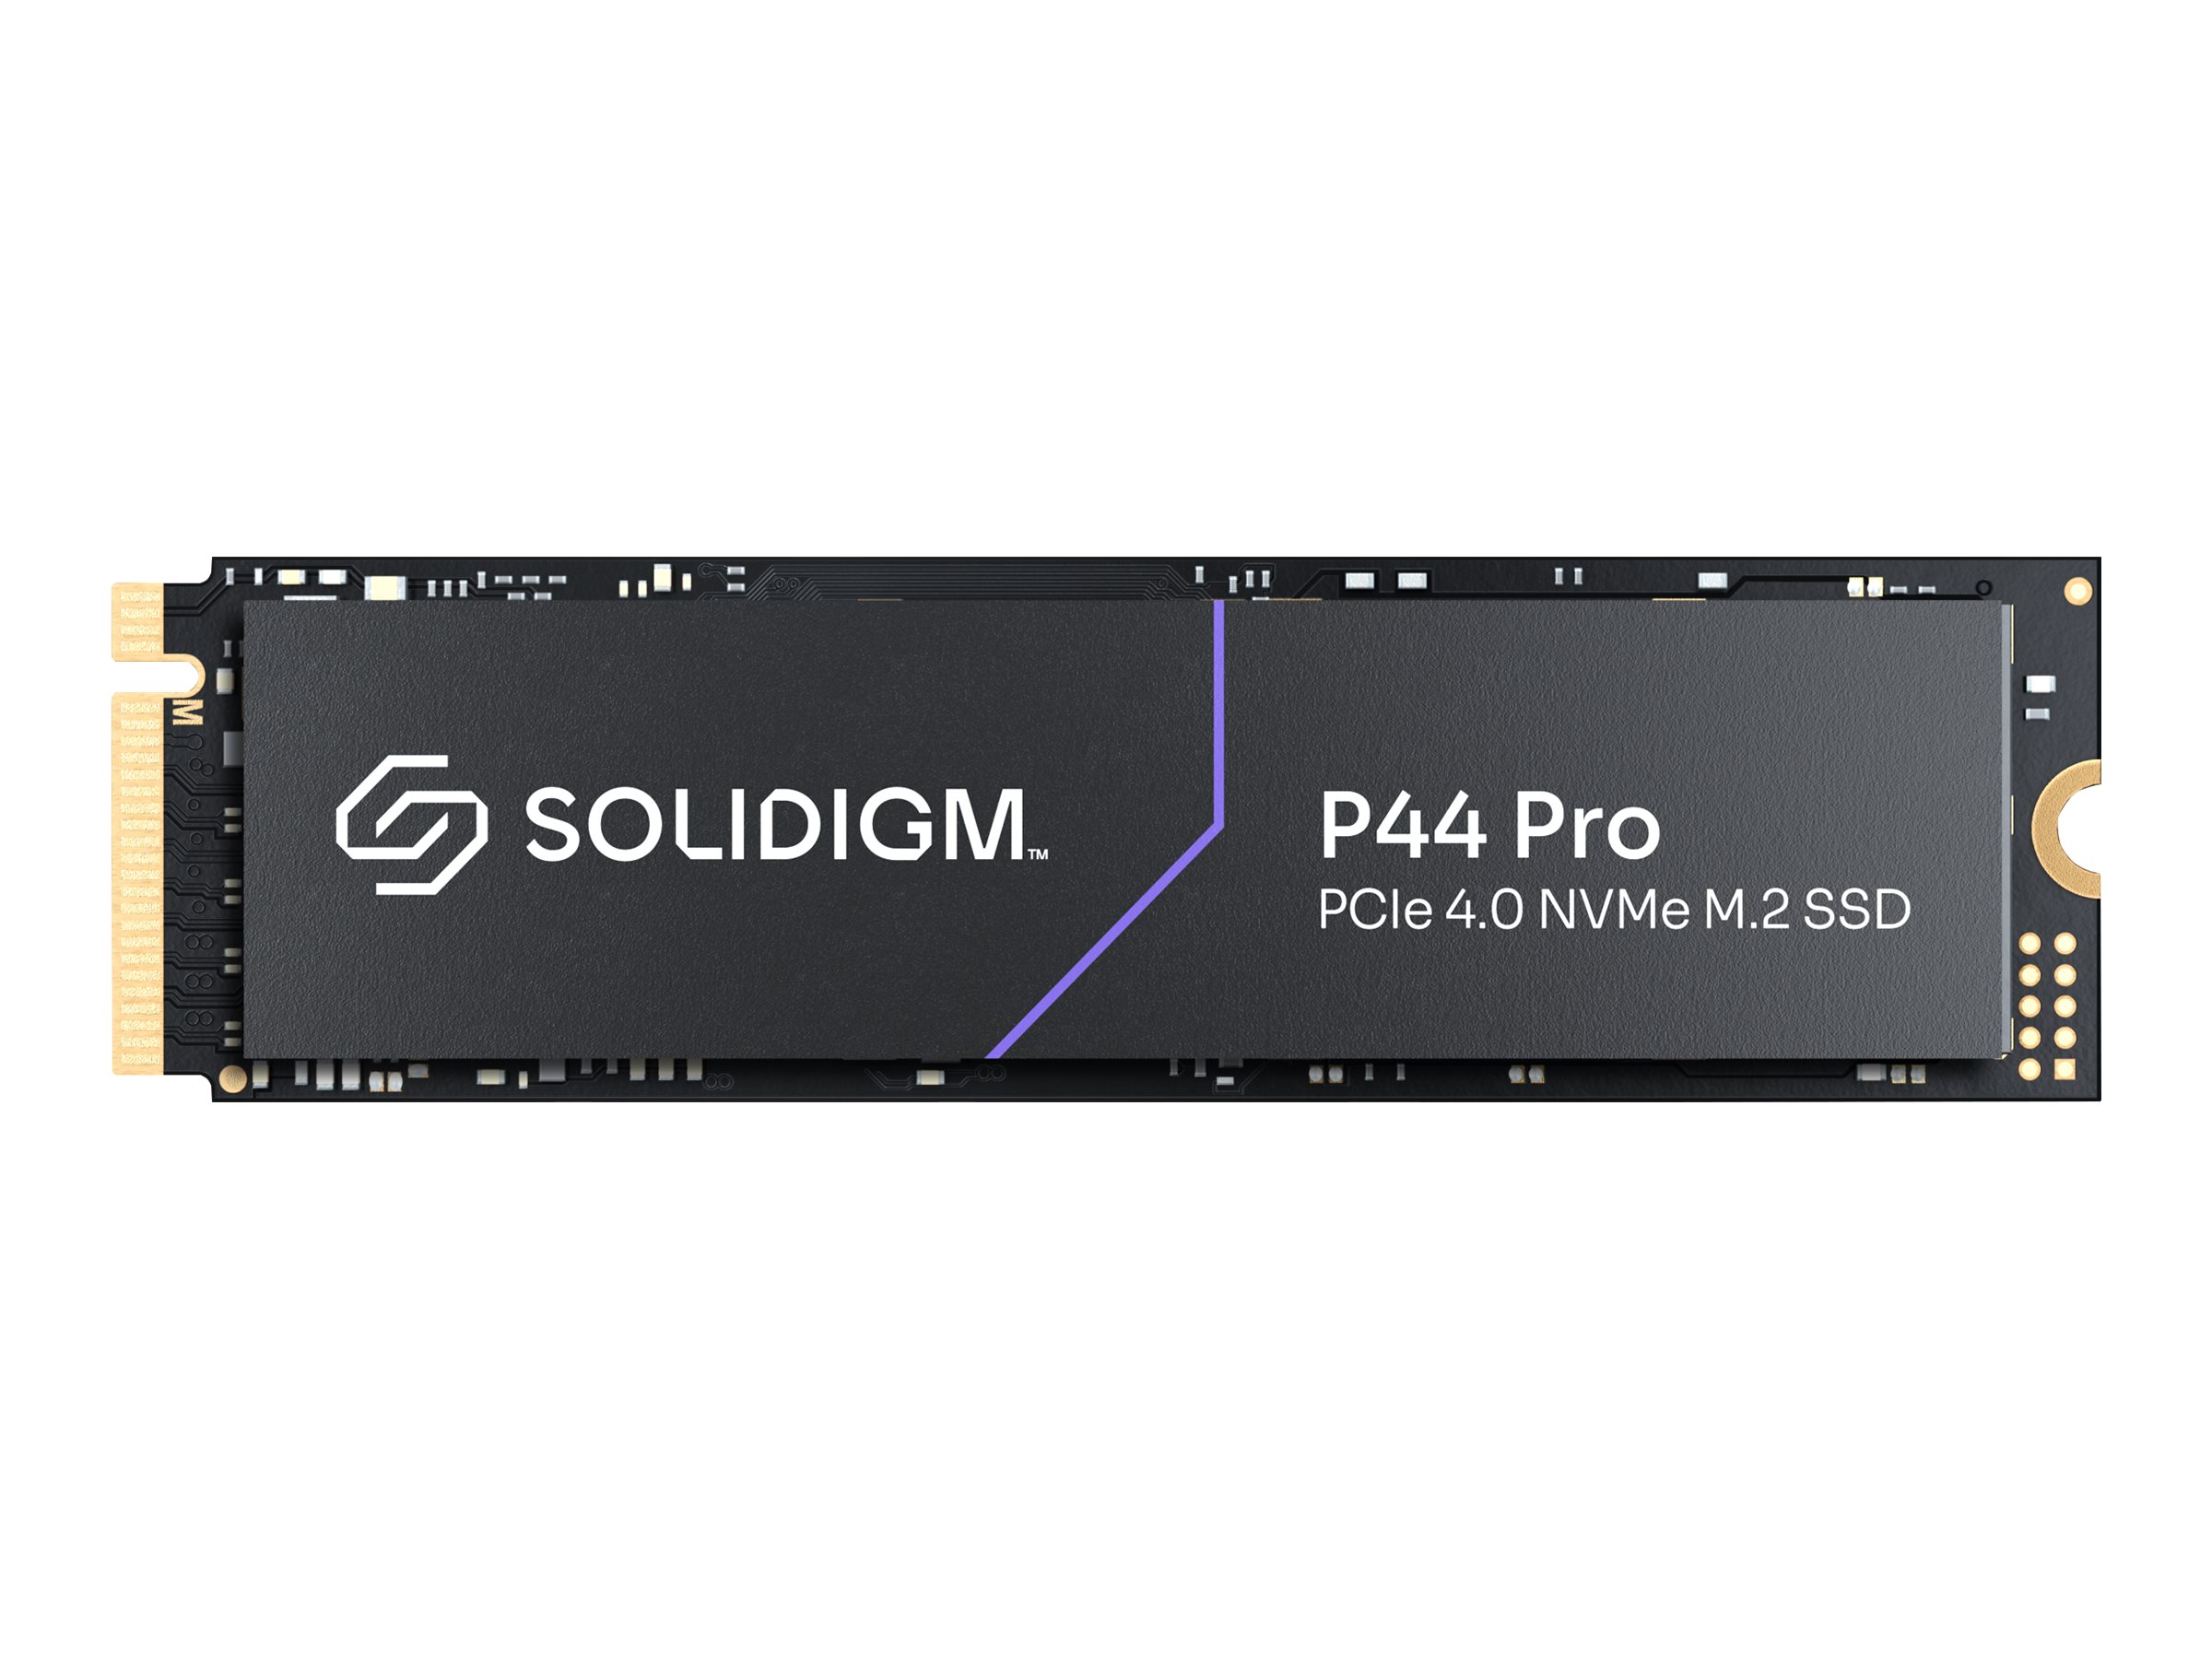 SOLIDIGM P44 Pro 2TB PCIe M.2 Retail (SSDPFKKW020X7X1)